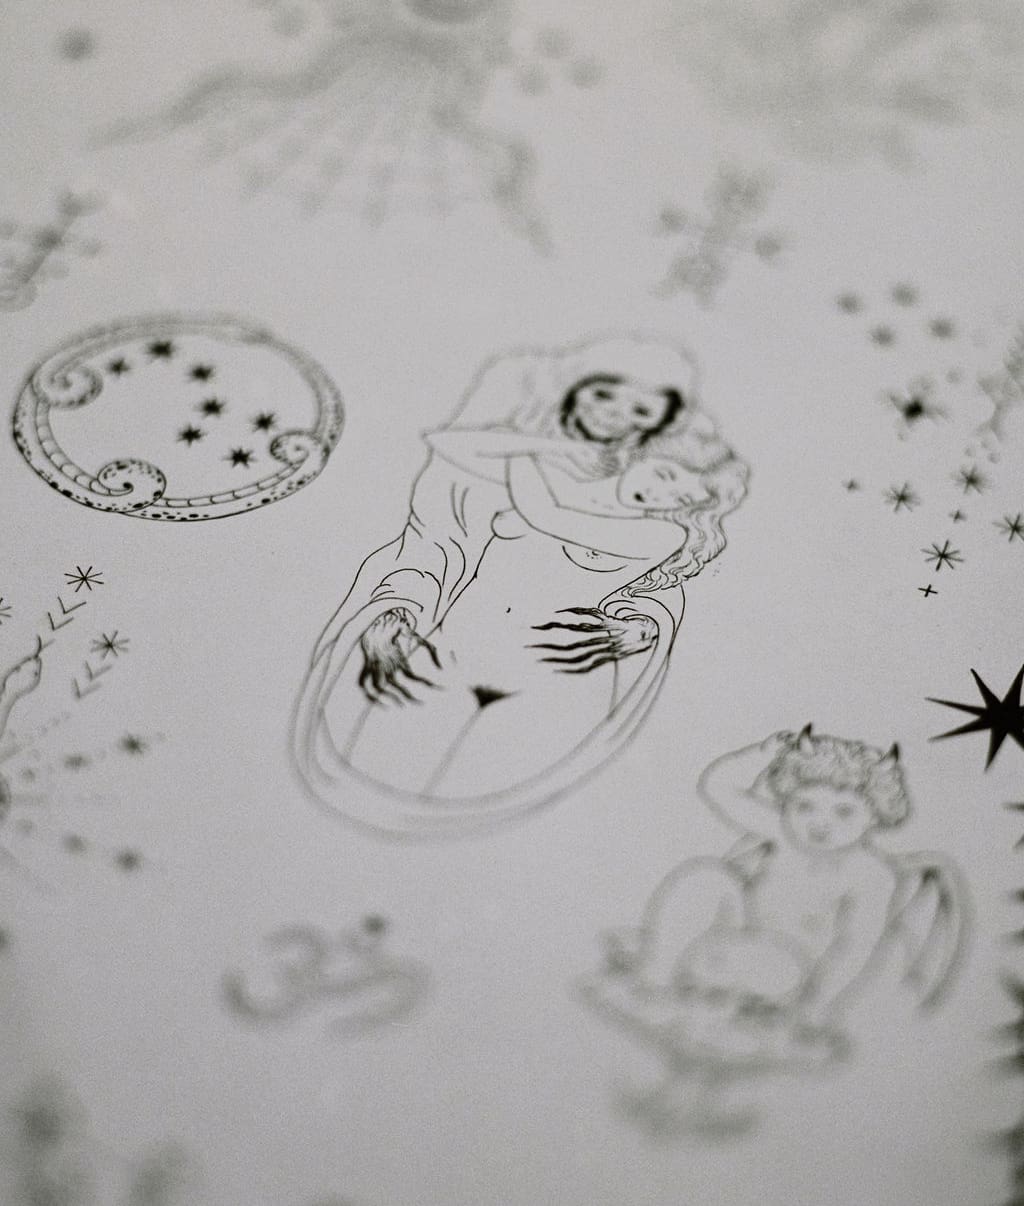 An interview with Tati Compton | Tati's cosmic illustrations